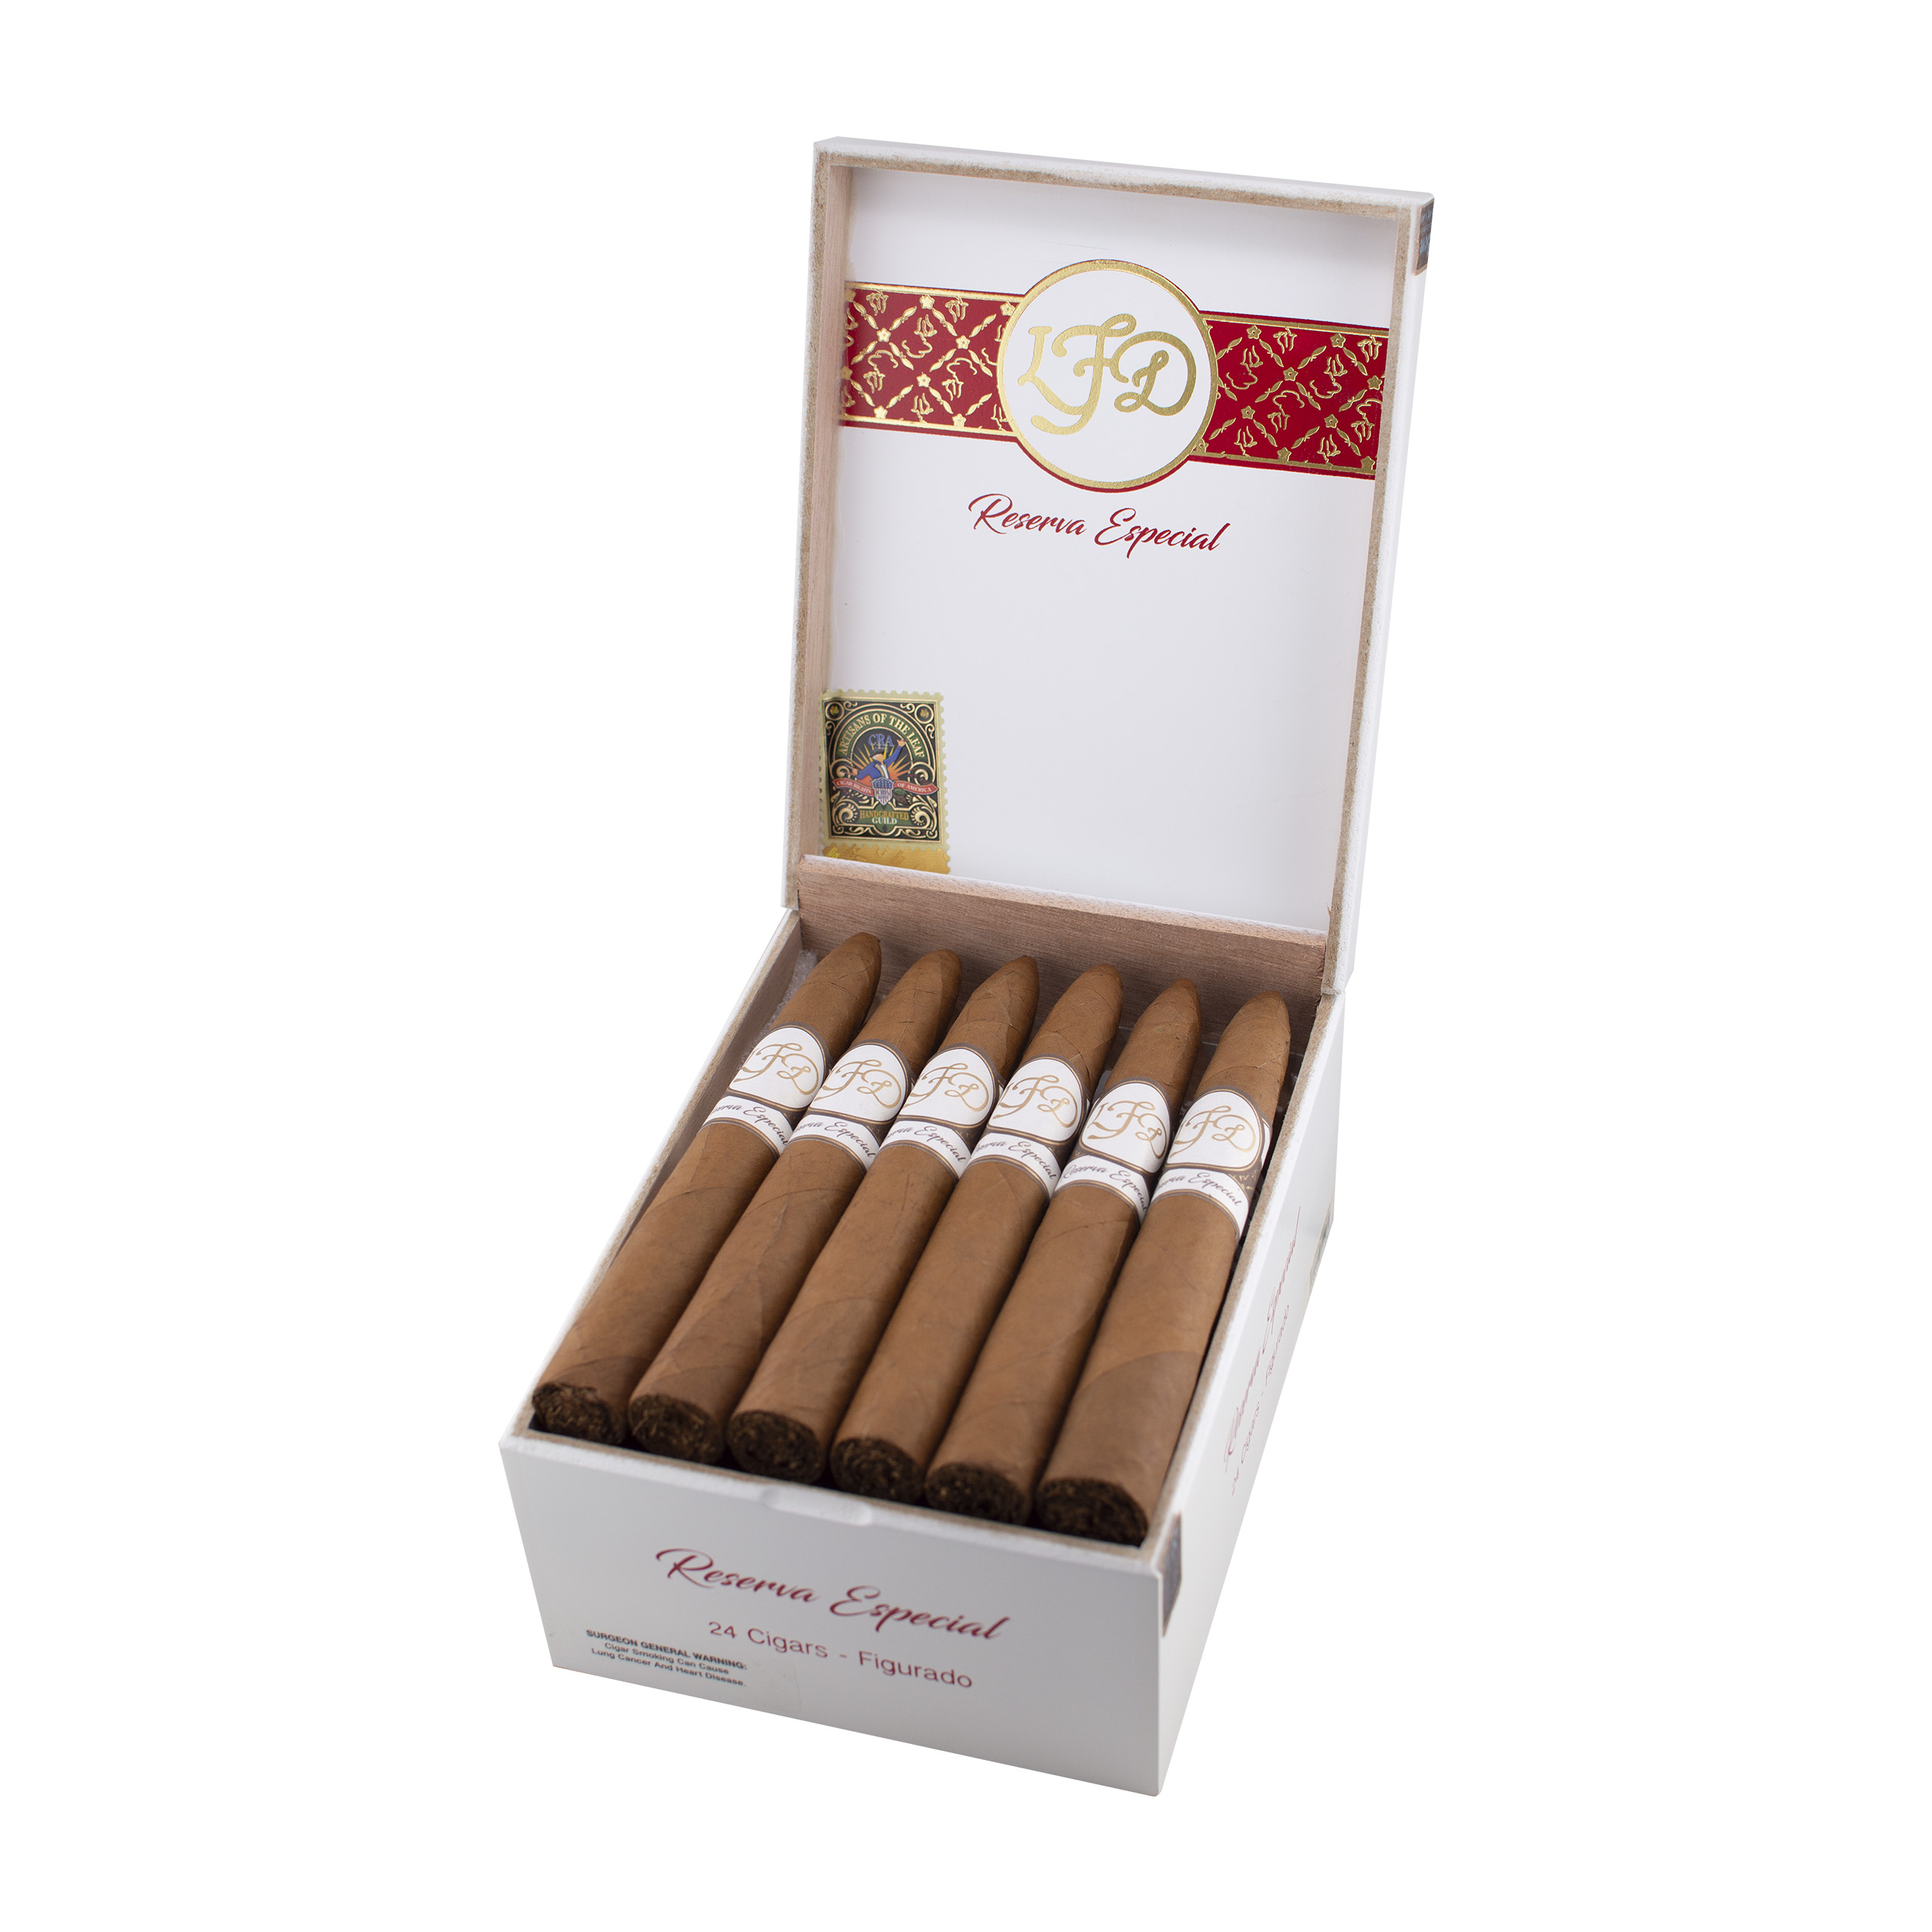 LFD Reserva Especial Figurado Cigar - Box